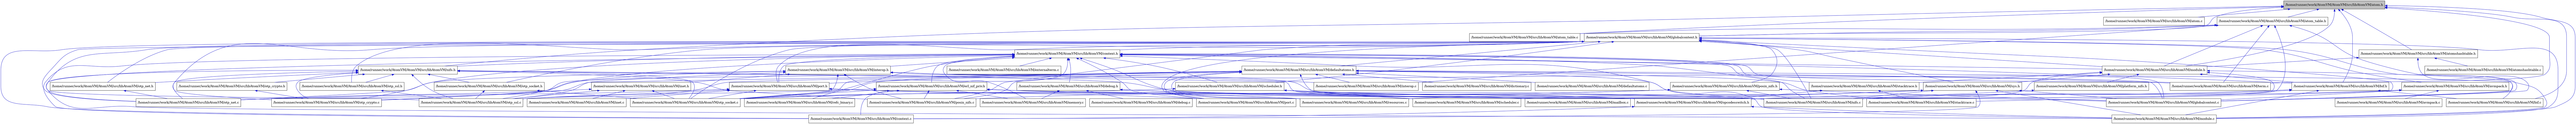 digraph {
    graph [bgcolor="#00000000"]
    node [shape=rectangle style=filled fillcolor="#FFFFFF" font=Helvetica padding=2]
    edge [color="#1414CE"]
    "13" [label="/home/runner/work/AtomVM/AtomVM/src/libAtomVM/bif.c" tooltip="/home/runner/work/AtomVM/AtomVM/src/libAtomVM/bif.c"]
    "50" [label="/home/runner/work/AtomVM/AtomVM/src/libAtomVM/dictionary.c" tooltip="/home/runner/work/AtomVM/AtomVM/src/libAtomVM/dictionary.c"]
    "12" [label="/home/runner/work/AtomVM/AtomVM/src/libAtomVM/bif.h" tooltip="/home/runner/work/AtomVM/AtomVM/src/libAtomVM/bif.h"]
    "35" [label="/home/runner/work/AtomVM/AtomVM/src/libAtomVM/platform_nifs.h" tooltip="/home/runner/work/AtomVM/AtomVM/src/libAtomVM/platform_nifs.h"]
    "2" [label="/home/runner/work/AtomVM/AtomVM/src/libAtomVM/atom.c" tooltip="/home/runner/work/AtomVM/AtomVM/src/libAtomVM/atom.c"]
    "23" [label="/home/runner/work/AtomVM/AtomVM/src/libAtomVM/posix_nifs.c" tooltip="/home/runner/work/AtomVM/AtomVM/src/libAtomVM/posix_nifs.c"]
    "1" [label="/home/runner/work/AtomVM/AtomVM/src/libAtomVM/atom.h" tooltip="/home/runner/work/AtomVM/AtomVM/src/libAtomVM/atom.h" fillcolor="#BFBFBF"]
    "51" [label="/home/runner/work/AtomVM/AtomVM/src/libAtomVM/posix_nifs.h" tooltip="/home/runner/work/AtomVM/AtomVM/src/libAtomVM/posix_nifs.h"]
    "49" [label="/home/runner/work/AtomVM/AtomVM/src/libAtomVM/defaultatoms.c" tooltip="/home/runner/work/AtomVM/AtomVM/src/libAtomVM/defaultatoms.c"]
    "48" [label="/home/runner/work/AtomVM/AtomVM/src/libAtomVM/defaultatoms.h" tooltip="/home/runner/work/AtomVM/AtomVM/src/libAtomVM/defaultatoms.h"]
    "29" [label="/home/runner/work/AtomVM/AtomVM/src/libAtomVM/inet.c" tooltip="/home/runner/work/AtomVM/AtomVM/src/libAtomVM/inet.c"]
    "28" [label="/home/runner/work/AtomVM/AtomVM/src/libAtomVM/inet.h" tooltip="/home/runner/work/AtomVM/AtomVM/src/libAtomVM/inet.h"]
    "19" [label="/home/runner/work/AtomVM/AtomVM/src/libAtomVM/scheduler.c" tooltip="/home/runner/work/AtomVM/AtomVM/src/libAtomVM/scheduler.c"]
    "46" [label="/home/runner/work/AtomVM/AtomVM/src/libAtomVM/scheduler.h" tooltip="/home/runner/work/AtomVM/AtomVM/src/libAtomVM/scheduler.h"]
    "10" [label="/home/runner/work/AtomVM/AtomVM/src/libAtomVM/context.c" tooltip="/home/runner/work/AtomVM/AtomVM/src/libAtomVM/context.c"]
    "11" [label="/home/runner/work/AtomVM/AtomVM/src/libAtomVM/context.h" tooltip="/home/runner/work/AtomVM/AtomVM/src/libAtomVM/context.h"]
    "44" [label="/home/runner/work/AtomVM/AtomVM/src/libAtomVM/port.c" tooltip="/home/runner/work/AtomVM/AtomVM/src/libAtomVM/port.c"]
    "45" [label="/home/runner/work/AtomVM/AtomVM/src/libAtomVM/port.h" tooltip="/home/runner/work/AtomVM/AtomVM/src/libAtomVM/port.h"]
    "3" [label="/home/runner/work/AtomVM/AtomVM/src/libAtomVM/atom_table.c" tooltip="/home/runner/work/AtomVM/AtomVM/src/libAtomVM/atom_table.c"]
    "4" [label="/home/runner/work/AtomVM/AtomVM/src/libAtomVM/atom_table.h" tooltip="/home/runner/work/AtomVM/AtomVM/src/libAtomVM/atom_table.h"]
    "37" [label="/home/runner/work/AtomVM/AtomVM/src/libAtomVM/stacktrace.c" tooltip="/home/runner/work/AtomVM/AtomVM/src/libAtomVM/stacktrace.c"]
    "36" [label="/home/runner/work/AtomVM/AtomVM/src/libAtomVM/stacktrace.h" tooltip="/home/runner/work/AtomVM/AtomVM/src/libAtomVM/stacktrace.h"]
    "24" [label="/home/runner/work/AtomVM/AtomVM/src/libAtomVM/refc_binary.c" tooltip="/home/runner/work/AtomVM/AtomVM/src/libAtomVM/refc_binary.c"]
    "47" [label="/home/runner/work/AtomVM/AtomVM/src/libAtomVM/mailbox.c" tooltip="/home/runner/work/AtomVM/AtomVM/src/libAtomVM/mailbox.c"]
    "14" [label="/home/runner/work/AtomVM/AtomVM/src/libAtomVM/module.c" tooltip="/home/runner/work/AtomVM/AtomVM/src/libAtomVM/module.c"]
    "34" [label="/home/runner/work/AtomVM/AtomVM/src/libAtomVM/module.h" tooltip="/home/runner/work/AtomVM/AtomVM/src/libAtomVM/module.h"]
    "8" [label="/home/runner/work/AtomVM/AtomVM/src/libAtomVM/avmpack.c" tooltip="/home/runner/work/AtomVM/AtomVM/src/libAtomVM/avmpack.c"]
    "7" [label="/home/runner/work/AtomVM/AtomVM/src/libAtomVM/avmpack.h" tooltip="/home/runner/work/AtomVM/AtomVM/src/libAtomVM/avmpack.h"]
    "33" [label="/home/runner/work/AtomVM/AtomVM/src/libAtomVM/term.c" tooltip="/home/runner/work/AtomVM/AtomVM/src/libAtomVM/term.c"]
    "31" [label="/home/runner/work/AtomVM/AtomVM/src/libAtomVM/interop.c" tooltip="/home/runner/work/AtomVM/AtomVM/src/libAtomVM/interop.c"]
    "22" [label="/home/runner/work/AtomVM/AtomVM/src/libAtomVM/otp_ssl.c" tooltip="/home/runner/work/AtomVM/AtomVM/src/libAtomVM/otp_ssl.c"]
    "27" [label="/home/runner/work/AtomVM/AtomVM/src/libAtomVM/interop.h" tooltip="/home/runner/work/AtomVM/AtomVM/src/libAtomVM/interop.h"]
    "43" [label="/home/runner/work/AtomVM/AtomVM/src/libAtomVM/otp_ssl.h" tooltip="/home/runner/work/AtomVM/AtomVM/src/libAtomVM/otp_ssl.h"]
    "25" [label="/home/runner/work/AtomVM/AtomVM/src/libAtomVM/resources.c" tooltip="/home/runner/work/AtomVM/AtomVM/src/libAtomVM/resources.c"]
    "32" [label="/home/runner/work/AtomVM/AtomVM/src/libAtomVM/otp_crypto.c" tooltip="/home/runner/work/AtomVM/AtomVM/src/libAtomVM/otp_crypto.c"]
    "40" [label="/home/runner/work/AtomVM/AtomVM/src/libAtomVM/otp_crypto.h" tooltip="/home/runner/work/AtomVM/AtomVM/src/libAtomVM/otp_crypto.h"]
    "30" [label="/home/runner/work/AtomVM/AtomVM/src/libAtomVM/otp_net.c" tooltip="/home/runner/work/AtomVM/AtomVM/src/libAtomVM/otp_net.c"]
    "41" [label="/home/runner/work/AtomVM/AtomVM/src/libAtomVM/otp_net.h" tooltip="/home/runner/work/AtomVM/AtomVM/src/libAtomVM/otp_net.h"]
    "20" [label="/home/runner/work/AtomVM/AtomVM/src/libAtomVM/erl_nif_priv.h" tooltip="/home/runner/work/AtomVM/AtomVM/src/libAtomVM/erl_nif_priv.h"]
    "38" [label="/home/runner/work/AtomVM/AtomVM/src/libAtomVM/sys.h" tooltip="/home/runner/work/AtomVM/AtomVM/src/libAtomVM/sys.h"]
    "53" [label="/home/runner/work/AtomVM/AtomVM/src/libAtomVM/atomshashtable.c" tooltip="/home/runner/work/AtomVM/AtomVM/src/libAtomVM/atomshashtable.c"]
    "52" [label="/home/runner/work/AtomVM/AtomVM/src/libAtomVM/atomshashtable.h" tooltip="/home/runner/work/AtomVM/AtomVM/src/libAtomVM/atomshashtable.h"]
    "9" [label="/home/runner/work/AtomVM/AtomVM/src/libAtomVM/nifs.c" tooltip="/home/runner/work/AtomVM/AtomVM/src/libAtomVM/nifs.c"]
    "39" [label="/home/runner/work/AtomVM/AtomVM/src/libAtomVM/nifs.h" tooltip="/home/runner/work/AtomVM/AtomVM/src/libAtomVM/nifs.h"]
    "15" [label="/home/runner/work/AtomVM/AtomVM/src/libAtomVM/opcodesswitch.h" tooltip="/home/runner/work/AtomVM/AtomVM/src/libAtomVM/opcodesswitch.h"]
    "17" [label="/home/runner/work/AtomVM/AtomVM/src/libAtomVM/debug.c" tooltip="/home/runner/work/AtomVM/AtomVM/src/libAtomVM/debug.c"]
    "16" [label="/home/runner/work/AtomVM/AtomVM/src/libAtomVM/debug.h" tooltip="/home/runner/work/AtomVM/AtomVM/src/libAtomVM/debug.h"]
    "5" [label="/home/runner/work/AtomVM/AtomVM/src/libAtomVM/globalcontext.c" tooltip="/home/runner/work/AtomVM/AtomVM/src/libAtomVM/globalcontext.c"]
    "6" [label="/home/runner/work/AtomVM/AtomVM/src/libAtomVM/globalcontext.h" tooltip="/home/runner/work/AtomVM/AtomVM/src/libAtomVM/globalcontext.h"]
    "18" [label="/home/runner/work/AtomVM/AtomVM/src/libAtomVM/memory.c" tooltip="/home/runner/work/AtomVM/AtomVM/src/libAtomVM/memory.c"]
    "21" [label="/home/runner/work/AtomVM/AtomVM/src/libAtomVM/otp_socket.c" tooltip="/home/runner/work/AtomVM/AtomVM/src/libAtomVM/otp_socket.c"]
    "42" [label="/home/runner/work/AtomVM/AtomVM/src/libAtomVM/otp_socket.h" tooltip="/home/runner/work/AtomVM/AtomVM/src/libAtomVM/otp_socket.h"]
    "26" [label="/home/runner/work/AtomVM/AtomVM/src/libAtomVM/externalterm.c" tooltip="/home/runner/work/AtomVM/AtomVM/src/libAtomVM/externalterm.c"]
    "12" -> "13" [dir=back tooltip="include"]
    "12" -> "14" [dir=back tooltip="include"]
    "12" -> "9" [dir=back tooltip="include"]
    "12" -> "15" [dir=back tooltip="include"]
    "35" -> "9" [dir=back tooltip="include"]
    "1" -> "2" [dir=back tooltip="include"]
    "1" -> "3" [dir=back tooltip="include"]
    "1" -> "4" [dir=back tooltip="include"]
    "1" -> "52" [dir=back tooltip="include"]
    "1" -> "13" [dir=back tooltip="include"]
    "1" -> "12" [dir=back tooltip="include"]
    "1" -> "6" [dir=back tooltip="include"]
    "1" -> "14" [dir=back tooltip="include"]
    "1" -> "34" [dir=back tooltip="include"]
    "1" -> "39" [dir=back tooltip="include"]
    "1" -> "33" [dir=back tooltip="include"]
    "51" -> "5" [dir=back tooltip="include"]
    "51" -> "9" [dir=back tooltip="include"]
    "51" -> "21" [dir=back tooltip="include"]
    "51" -> "23" [dir=back tooltip="include"]
    "48" -> "13" [dir=back tooltip="include"]
    "48" -> "49" [dir=back tooltip="include"]
    "48" -> "50" [dir=back tooltip="include"]
    "48" -> "5" [dir=back tooltip="include"]
    "48" -> "31" [dir=back tooltip="include"]
    "48" -> "9" [dir=back tooltip="include"]
    "48" -> "15" [dir=back tooltip="include"]
    "48" -> "32" [dir=back tooltip="include"]
    "48" -> "30" [dir=back tooltip="include"]
    "48" -> "21" [dir=back tooltip="include"]
    "48" -> "22" [dir=back tooltip="include"]
    "48" -> "44" [dir=back tooltip="include"]
    "48" -> "45" [dir=back tooltip="include"]
    "48" -> "23" [dir=back tooltip="include"]
    "48" -> "25" [dir=back tooltip="include"]
    "48" -> "37" [dir=back tooltip="include"]
    "28" -> "29" [dir=back tooltip="include"]
    "28" -> "30" [dir=back tooltip="include"]
    "28" -> "21" [dir=back tooltip="include"]
    "28" -> "22" [dir=back tooltip="include"]
    "46" -> "47" [dir=back tooltip="include"]
    "46" -> "9" [dir=back tooltip="include"]
    "46" -> "15" [dir=back tooltip="include"]
    "46" -> "21" [dir=back tooltip="include"]
    "46" -> "19" [dir=back tooltip="include"]
    "11" -> "12" [dir=back tooltip="include"]
    "11" -> "10" [dir=back tooltip="include"]
    "11" -> "16" [dir=back tooltip="include"]
    "11" -> "20" [dir=back tooltip="include"]
    "11" -> "26" [dir=back tooltip="include"]
    "11" -> "5" [dir=back tooltip="include"]
    "11" -> "27" [dir=back tooltip="include"]
    "11" -> "18" [dir=back tooltip="include"]
    "11" -> "14" [dir=back tooltip="include"]
    "11" -> "34" [dir=back tooltip="include"]
    "11" -> "9" [dir=back tooltip="include"]
    "11" -> "39" [dir=back tooltip="include"]
    "11" -> "32" [dir=back tooltip="include"]
    "11" -> "30" [dir=back tooltip="include"]
    "11" -> "21" [dir=back tooltip="include"]
    "11" -> "22" [dir=back tooltip="include"]
    "11" -> "44" [dir=back tooltip="include"]
    "11" -> "45" [dir=back tooltip="include"]
    "11" -> "24" [dir=back tooltip="include"]
    "11" -> "25" [dir=back tooltip="include"]
    "11" -> "46" [dir=back tooltip="include"]
    "11" -> "36" [dir=back tooltip="include"]
    "11" -> "33" [dir=back tooltip="include"]
    "45" -> "29" [dir=back tooltip="include"]
    "45" -> "9" [dir=back tooltip="include"]
    "45" -> "30" [dir=back tooltip="include"]
    "45" -> "21" [dir=back tooltip="include"]
    "45" -> "22" [dir=back tooltip="include"]
    "45" -> "44" [dir=back tooltip="include"]
    "4" -> "3" [dir=back tooltip="include"]
    "4" -> "5" [dir=back tooltip="include"]
    "4" -> "6" [dir=back tooltip="include"]
    "4" -> "31" [dir=back tooltip="include"]
    "4" -> "34" [dir=back tooltip="include"]
    "4" -> "9" [dir=back tooltip="include"]
    "4" -> "33" [dir=back tooltip="include"]
    "36" -> "15" [dir=back tooltip="include"]
    "36" -> "37" [dir=back tooltip="include"]
    "34" -> "12" [dir=back tooltip="include"]
    "34" -> "14" [dir=back tooltip="include"]
    "34" -> "9" [dir=back tooltip="include"]
    "34" -> "15" [dir=back tooltip="include"]
    "34" -> "35" [dir=back tooltip="include"]
    "34" -> "36" [dir=back tooltip="include"]
    "34" -> "38" [dir=back tooltip="include"]
    "7" -> "8" [dir=back tooltip="include"]
    "7" -> "5" [dir=back tooltip="include"]
    "7" -> "9" [dir=back tooltip="include"]
    "27" -> "28" [dir=back tooltip="include"]
    "27" -> "31" [dir=back tooltip="include"]
    "27" -> "9" [dir=back tooltip="include"]
    "27" -> "32" [dir=back tooltip="include"]
    "27" -> "30" [dir=back tooltip="include"]
    "27" -> "21" [dir=back tooltip="include"]
    "27" -> "22" [dir=back tooltip="include"]
    "27" -> "23" [dir=back tooltip="include"]
    "27" -> "33" [dir=back tooltip="include"]
    "43" -> "22" [dir=back tooltip="include"]
    "40" -> "32" [dir=back tooltip="include"]
    "41" -> "30" [dir=back tooltip="include"]
    "20" -> "10" [dir=back tooltip="include"]
    "20" -> "5" [dir=back tooltip="include"]
    "20" -> "18" [dir=back tooltip="include"]
    "20" -> "21" [dir=back tooltip="include"]
    "20" -> "22" [dir=back tooltip="include"]
    "20" -> "23" [dir=back tooltip="include"]
    "20" -> "24" [dir=back tooltip="include"]
    "20" -> "25" [dir=back tooltip="include"]
    "38" -> "10" [dir=back tooltip="include"]
    "38" -> "5" [dir=back tooltip="include"]
    "38" -> "14" [dir=back tooltip="include"]
    "38" -> "9" [dir=back tooltip="include"]
    "38" -> "21" [dir=back tooltip="include"]
    "38" -> "25" [dir=back tooltip="include"]
    "38" -> "19" [dir=back tooltip="include"]
    "52" -> "53" [dir=back tooltip="include"]
    "52" -> "5" [dir=back tooltip="include"]
    "52" -> "34" [dir=back tooltip="include"]
    "39" -> "14" [dir=back tooltip="include"]
    "39" -> "9" [dir=back tooltip="include"]
    "39" -> "15" [dir=back tooltip="include"]
    "39" -> "32" [dir=back tooltip="include"]
    "39" -> "40" [dir=back tooltip="include"]
    "39" -> "30" [dir=back tooltip="include"]
    "39" -> "41" [dir=back tooltip="include"]
    "39" -> "21" [dir=back tooltip="include"]
    "39" -> "42" [dir=back tooltip="include"]
    "39" -> "22" [dir=back tooltip="include"]
    "39" -> "43" [dir=back tooltip="include"]
    "39" -> "23" [dir=back tooltip="include"]
    "15" -> "10" [dir=back tooltip="include"]
    "15" -> "14" [dir=back tooltip="include"]
    "16" -> "17" [dir=back tooltip="include"]
    "16" -> "18" [dir=back tooltip="include"]
    "16" -> "15" [dir=back tooltip="include"]
    "16" -> "19" [dir=back tooltip="include"]
    "6" -> "7" [dir=back tooltip="include"]
    "6" -> "10" [dir=back tooltip="include"]
    "6" -> "11" [dir=back tooltip="include"]
    "6" -> "48" [dir=back tooltip="include"]
    "6" -> "5" [dir=back tooltip="include"]
    "6" -> "14" [dir=back tooltip="include"]
    "6" -> "34" [dir=back tooltip="include"]
    "6" -> "9" [dir=back tooltip="include"]
    "6" -> "32" [dir=back tooltip="include"]
    "6" -> "30" [dir=back tooltip="include"]
    "6" -> "41" [dir=back tooltip="include"]
    "6" -> "21" [dir=back tooltip="include"]
    "6" -> "42" [dir=back tooltip="include"]
    "6" -> "22" [dir=back tooltip="include"]
    "6" -> "43" [dir=back tooltip="include"]
    "6" -> "44" [dir=back tooltip="include"]
    "6" -> "45" [dir=back tooltip="include"]
    "6" -> "23" [dir=back tooltip="include"]
    "6" -> "51" [dir=back tooltip="include"]
    "6" -> "46" [dir=back tooltip="include"]
    "6" -> "37" [dir=back tooltip="include"]
    "6" -> "38" [dir=back tooltip="include"]
    "42" -> "21" [dir=back tooltip="include"]
    "42" -> "22" [dir=back tooltip="include"]
}